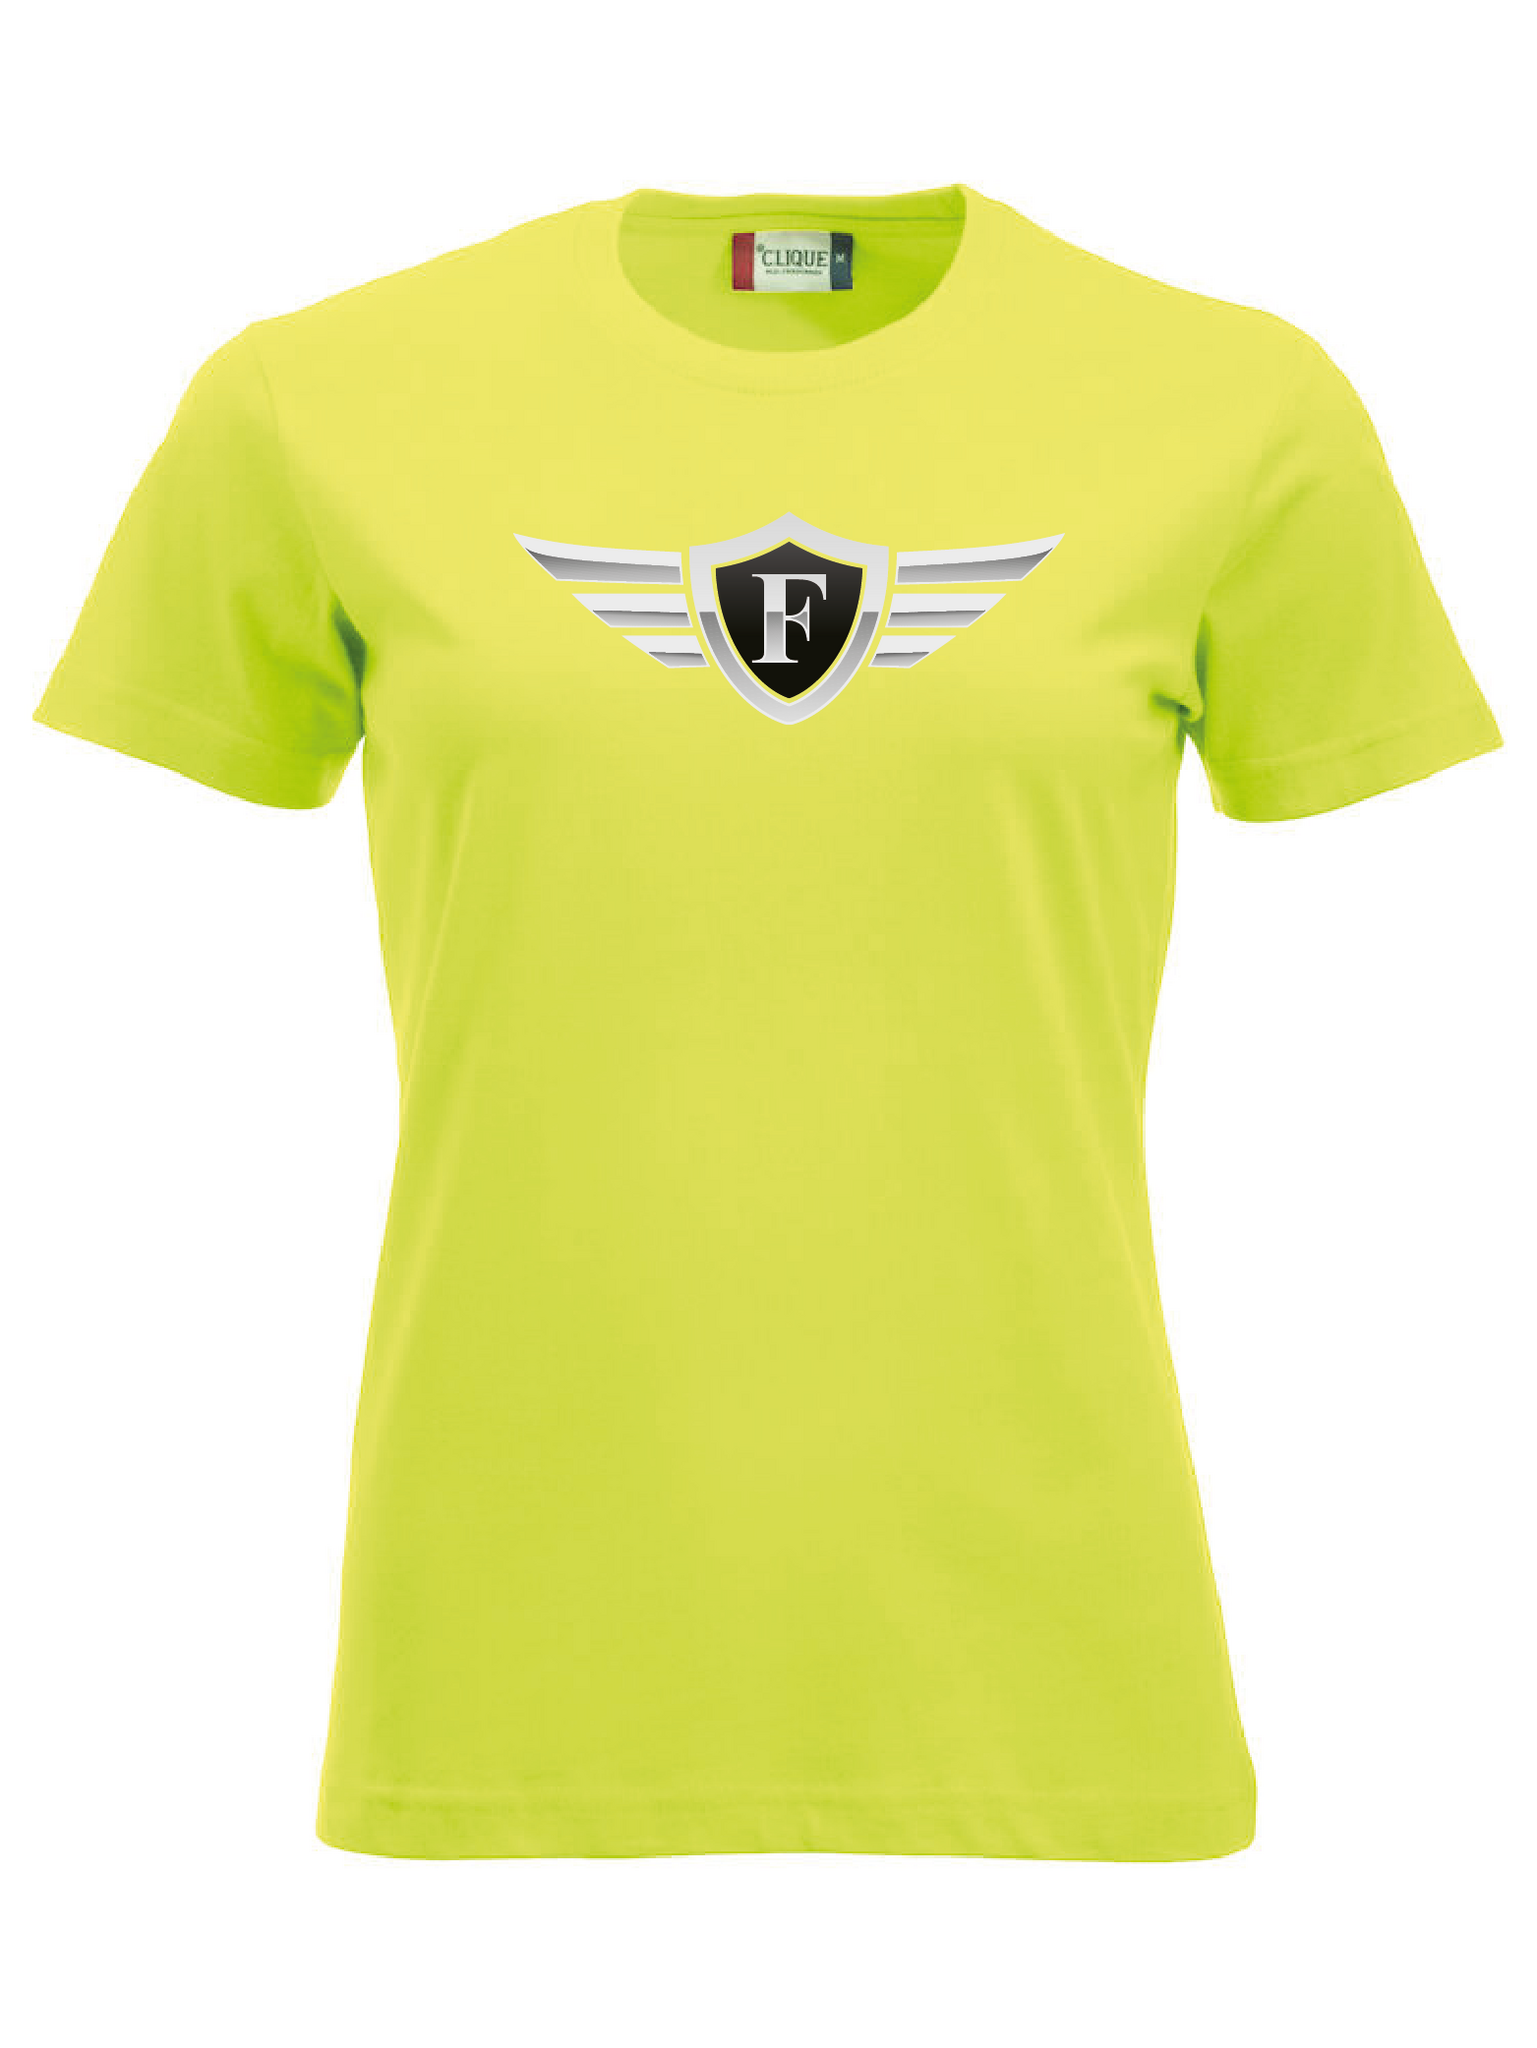 NeonGrön Dam T-shirt "FOXIE Wings"